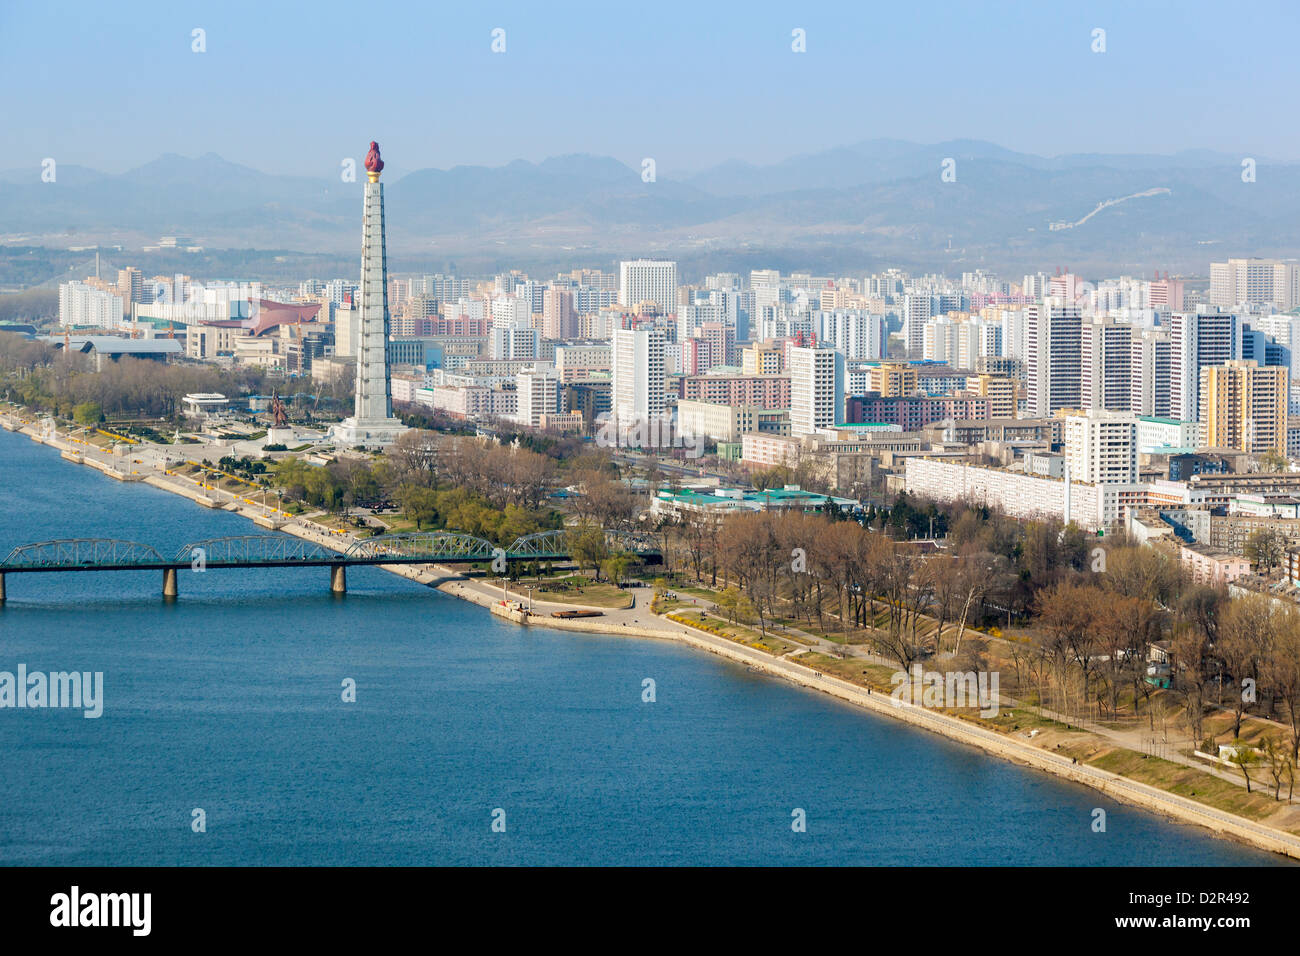 City skyline and the Juche Tower, Pyongyang, Democratic People's Republic of Korea (DPRK), North Korea, Asia Stock Photo